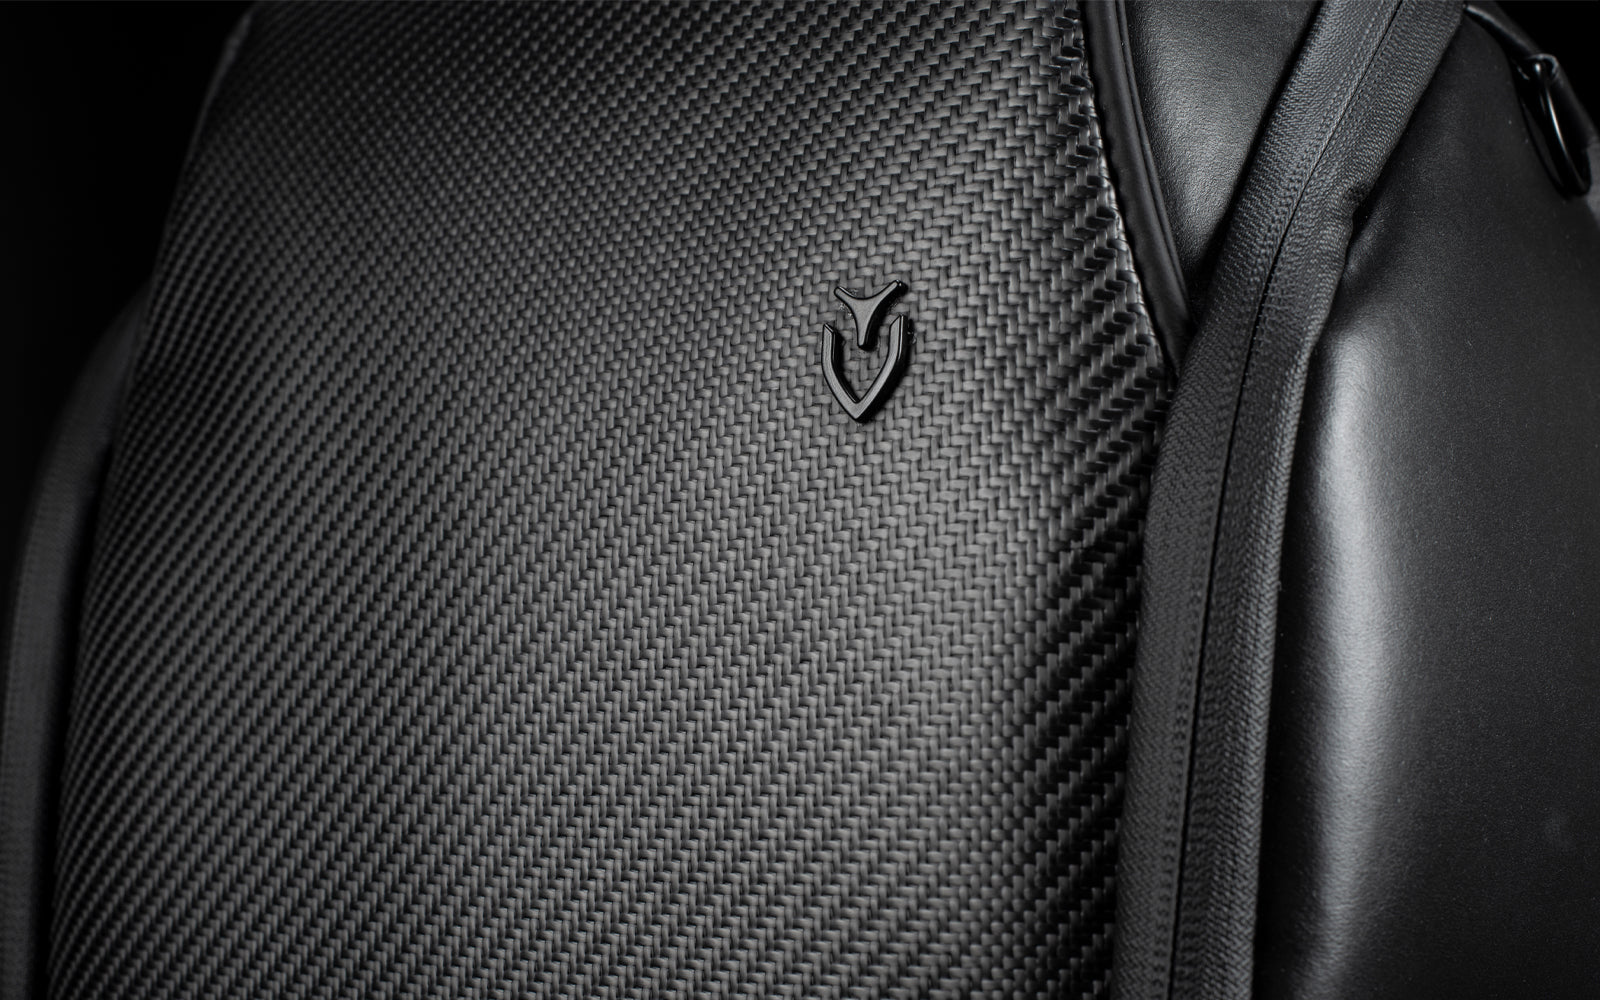 Close up of carbon fiber material on front of backpack with VESSEL emblem